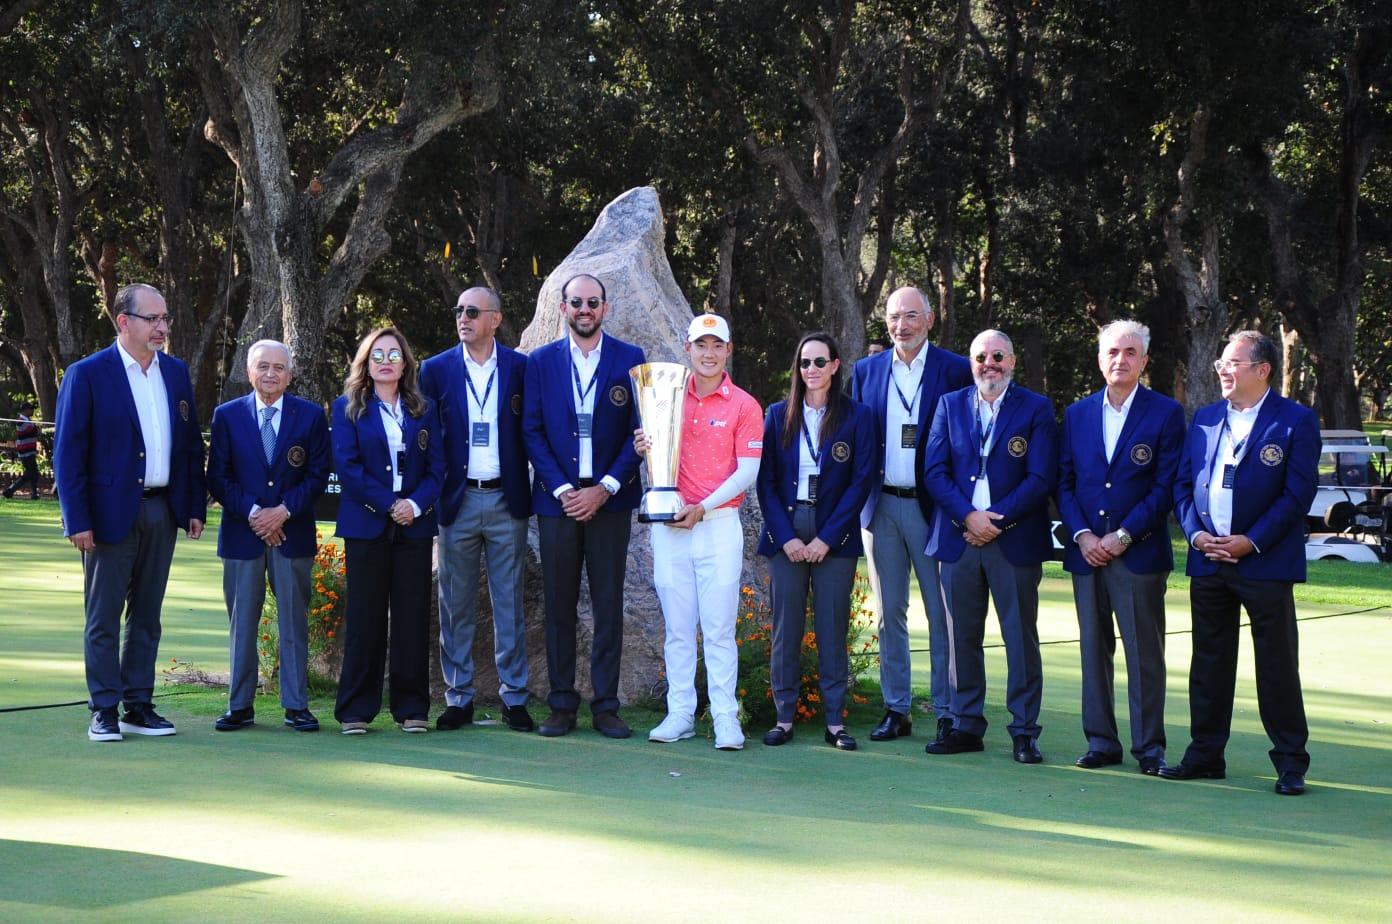 Golf / International Series Morocco : Victoire du Thaïlandais Janewattananond Jazz et bonne prestation des Marocains